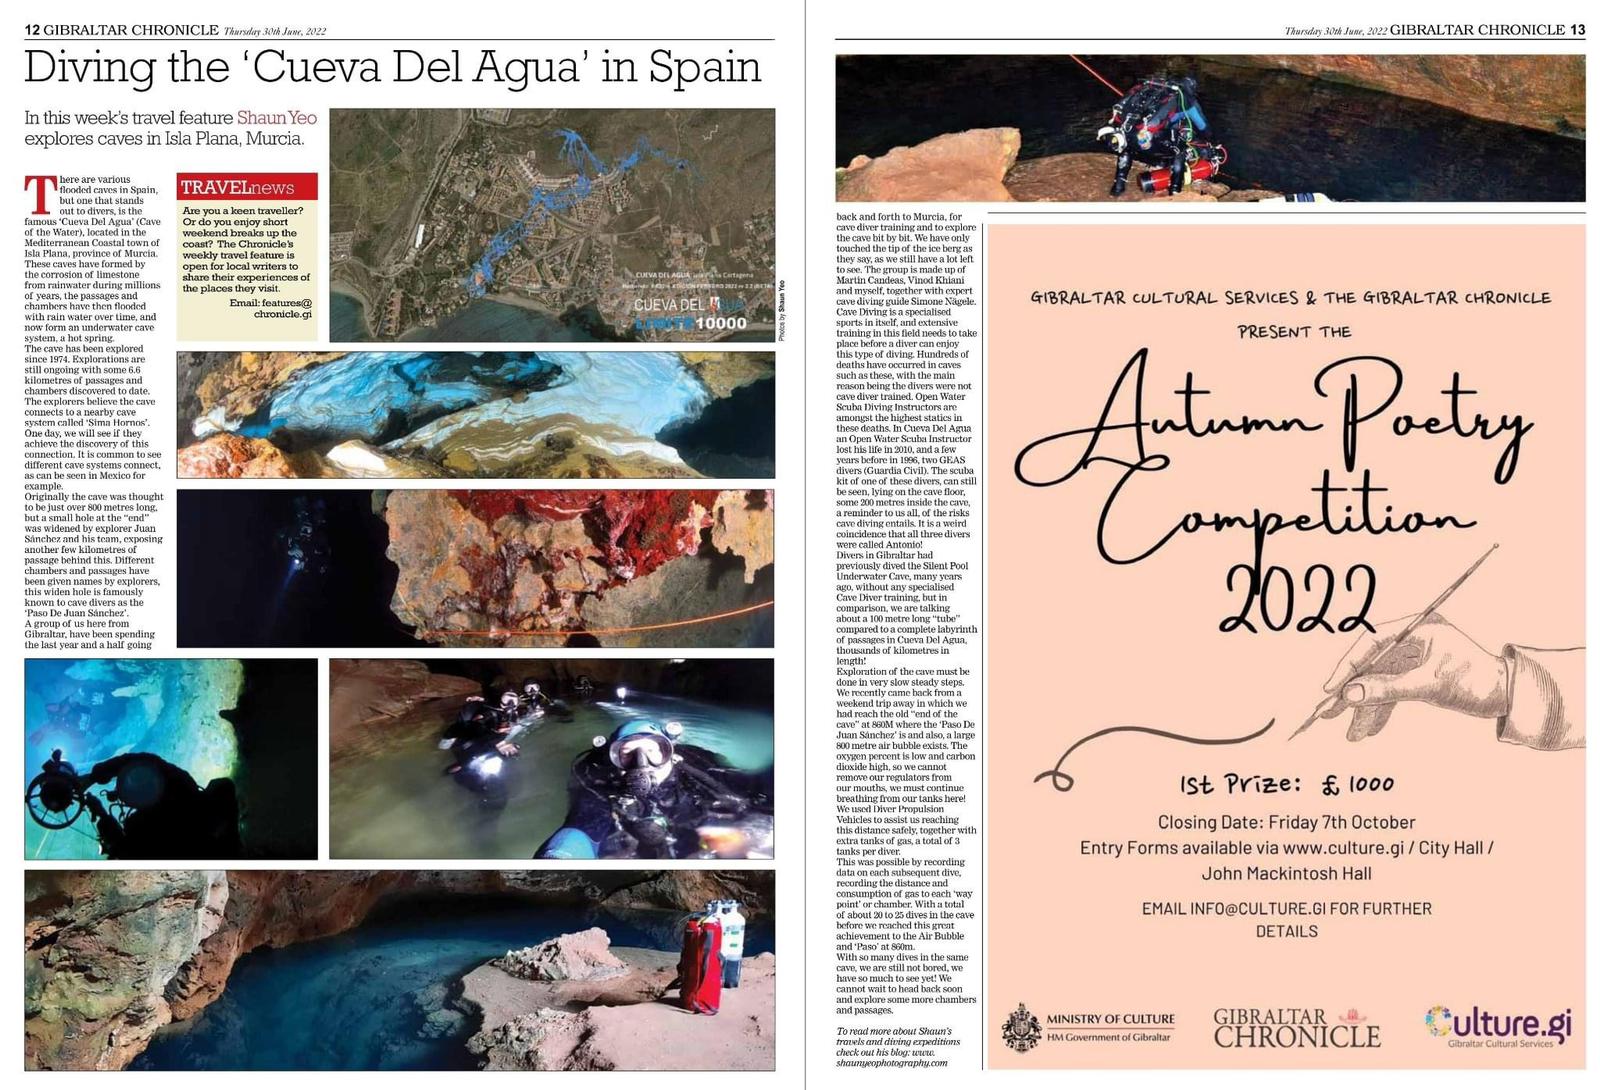 Article: Cave diving the Cueva del Agua in Spain